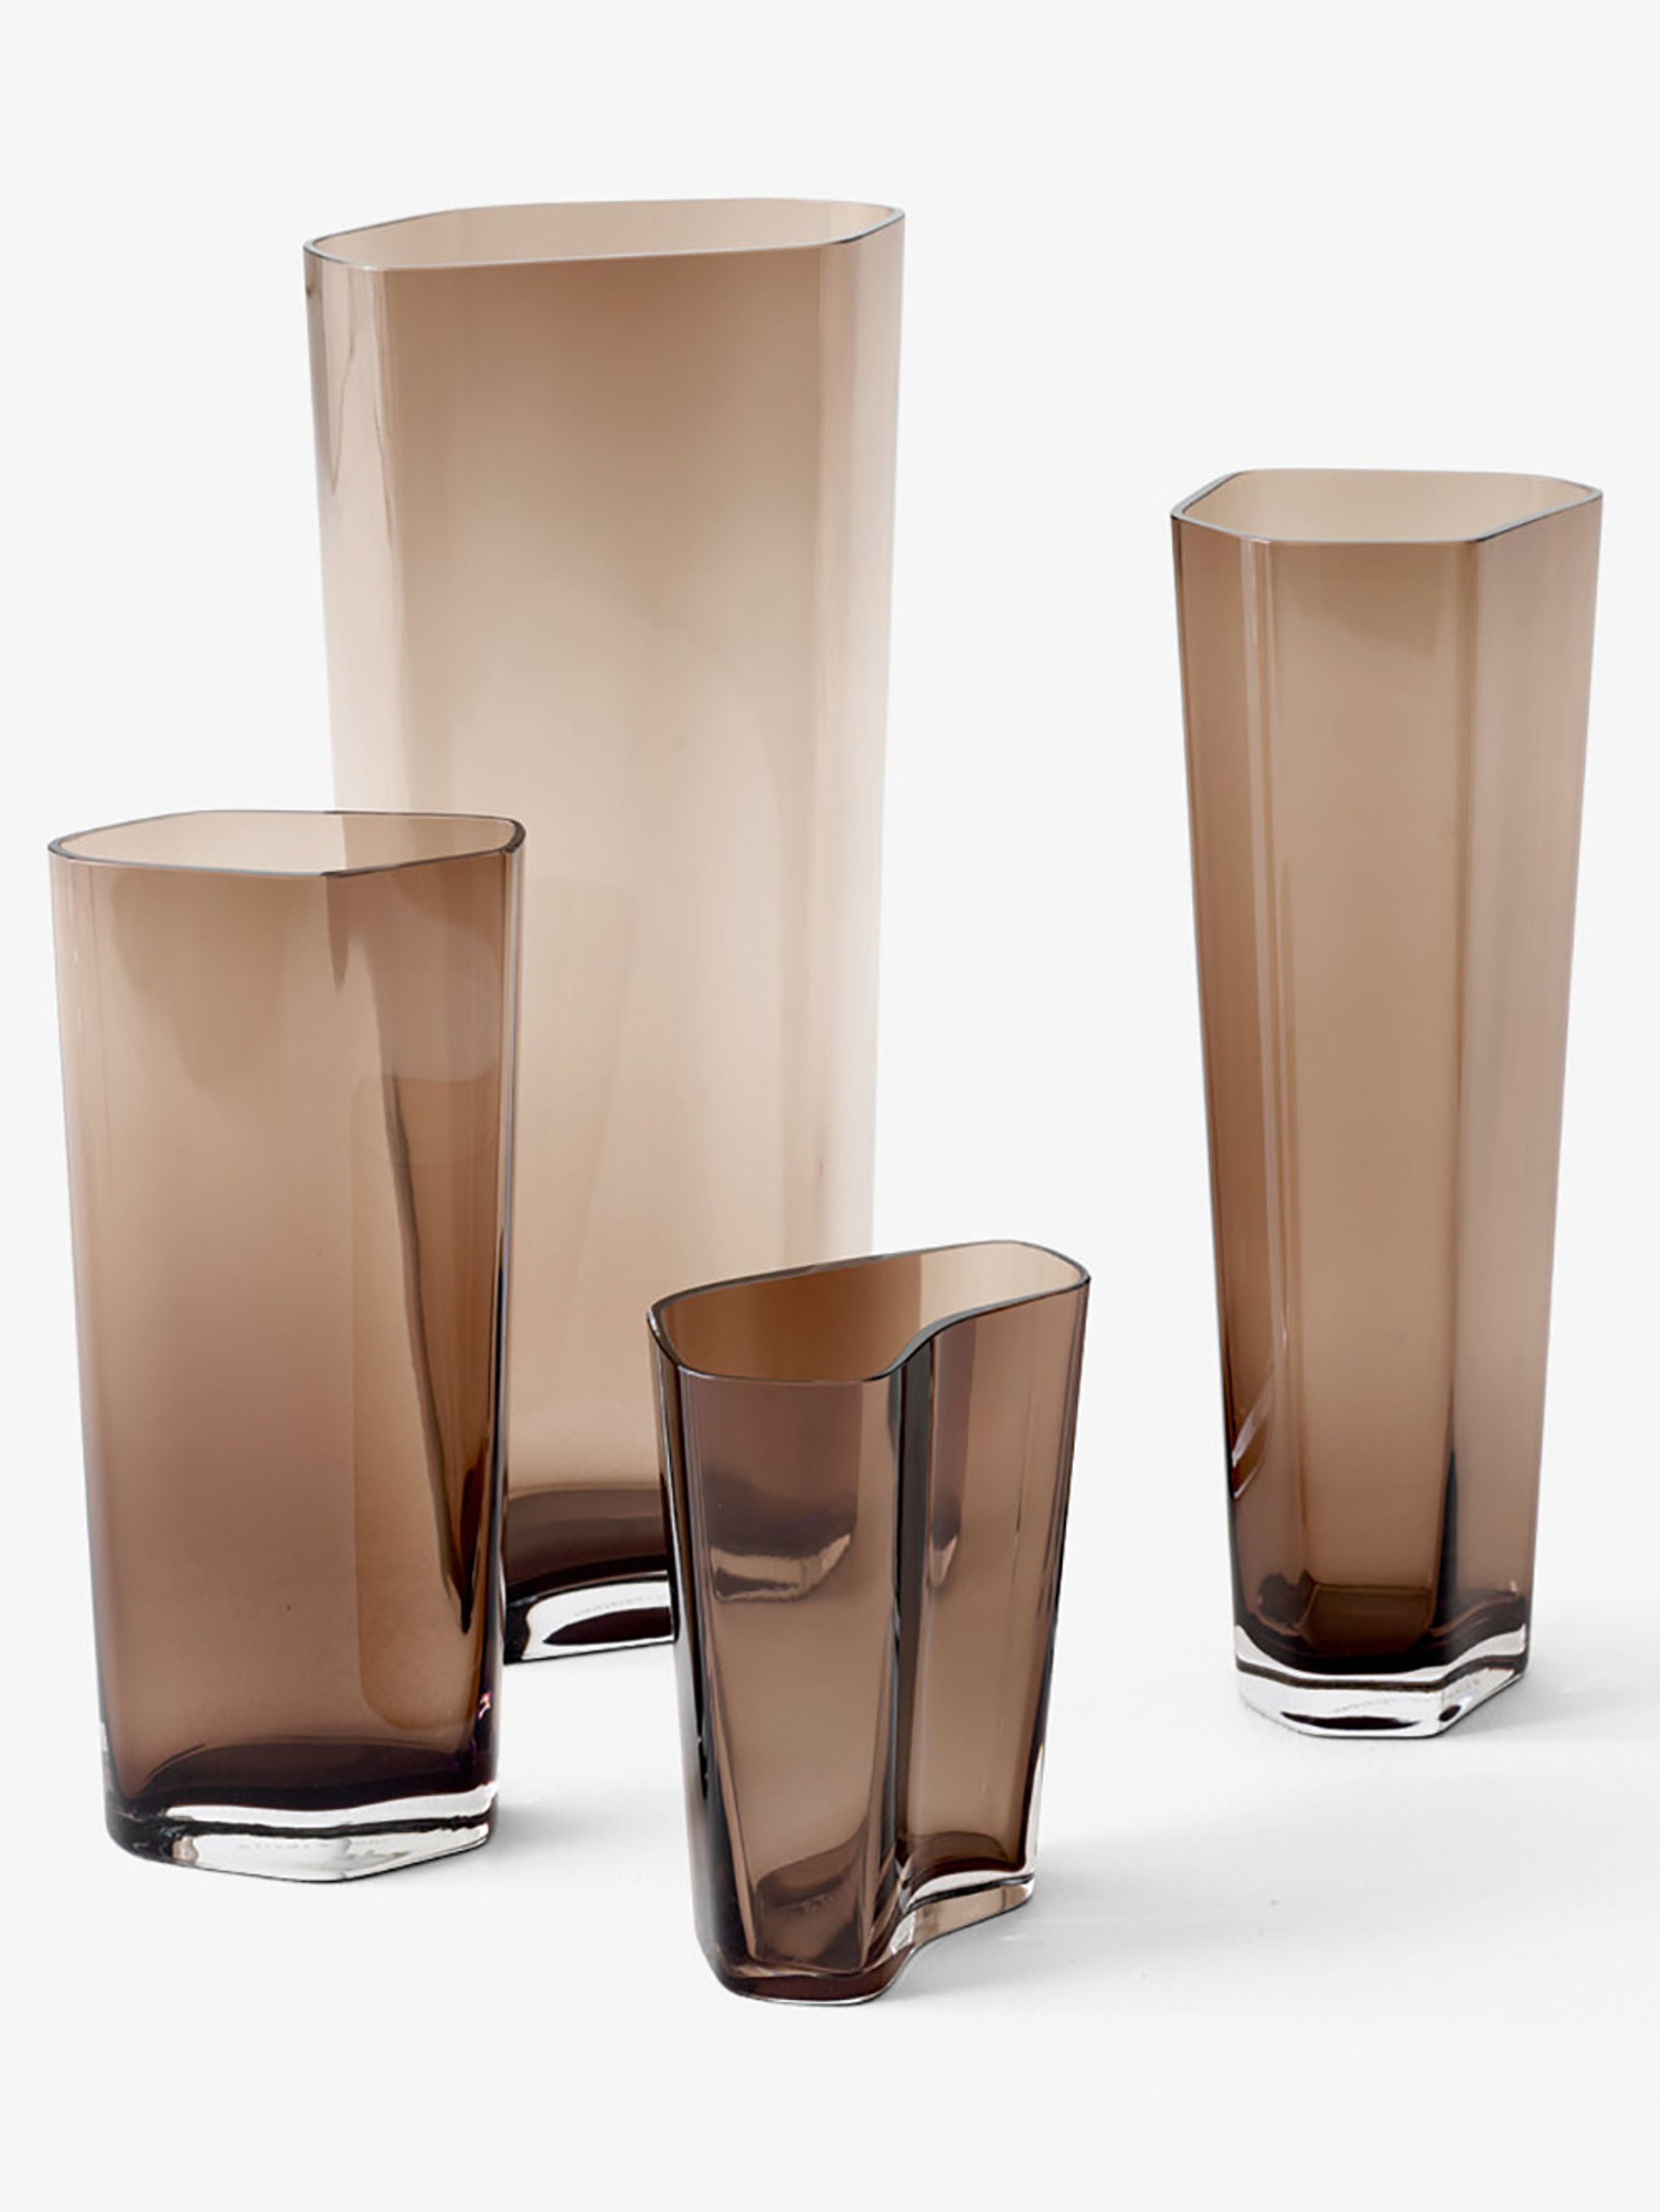 &tradition - Vase - Collect - Glass Vase SC35, SC36, SC37 & SC38 - Caramel - SC37